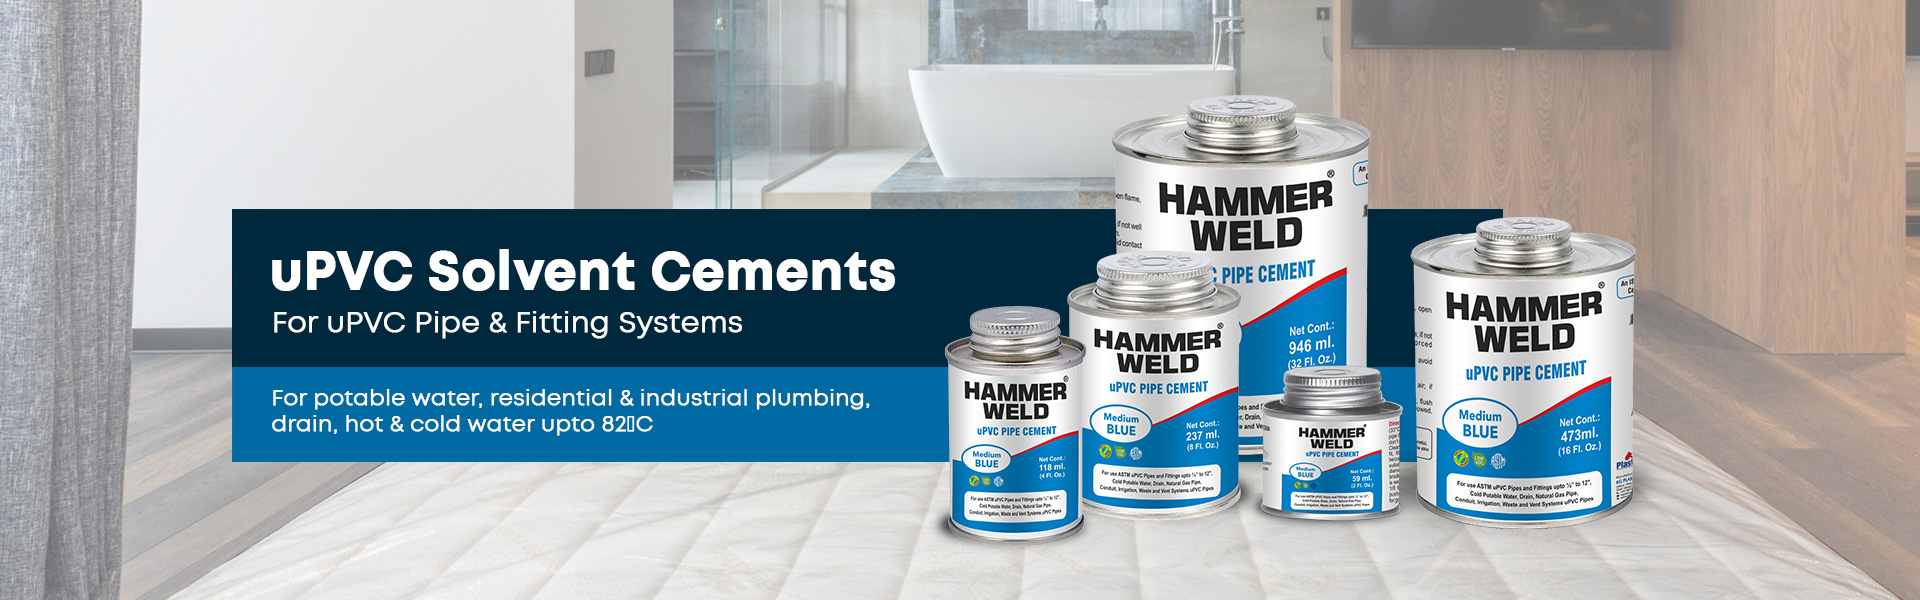 HammerWeld UPVC Pipe Cement